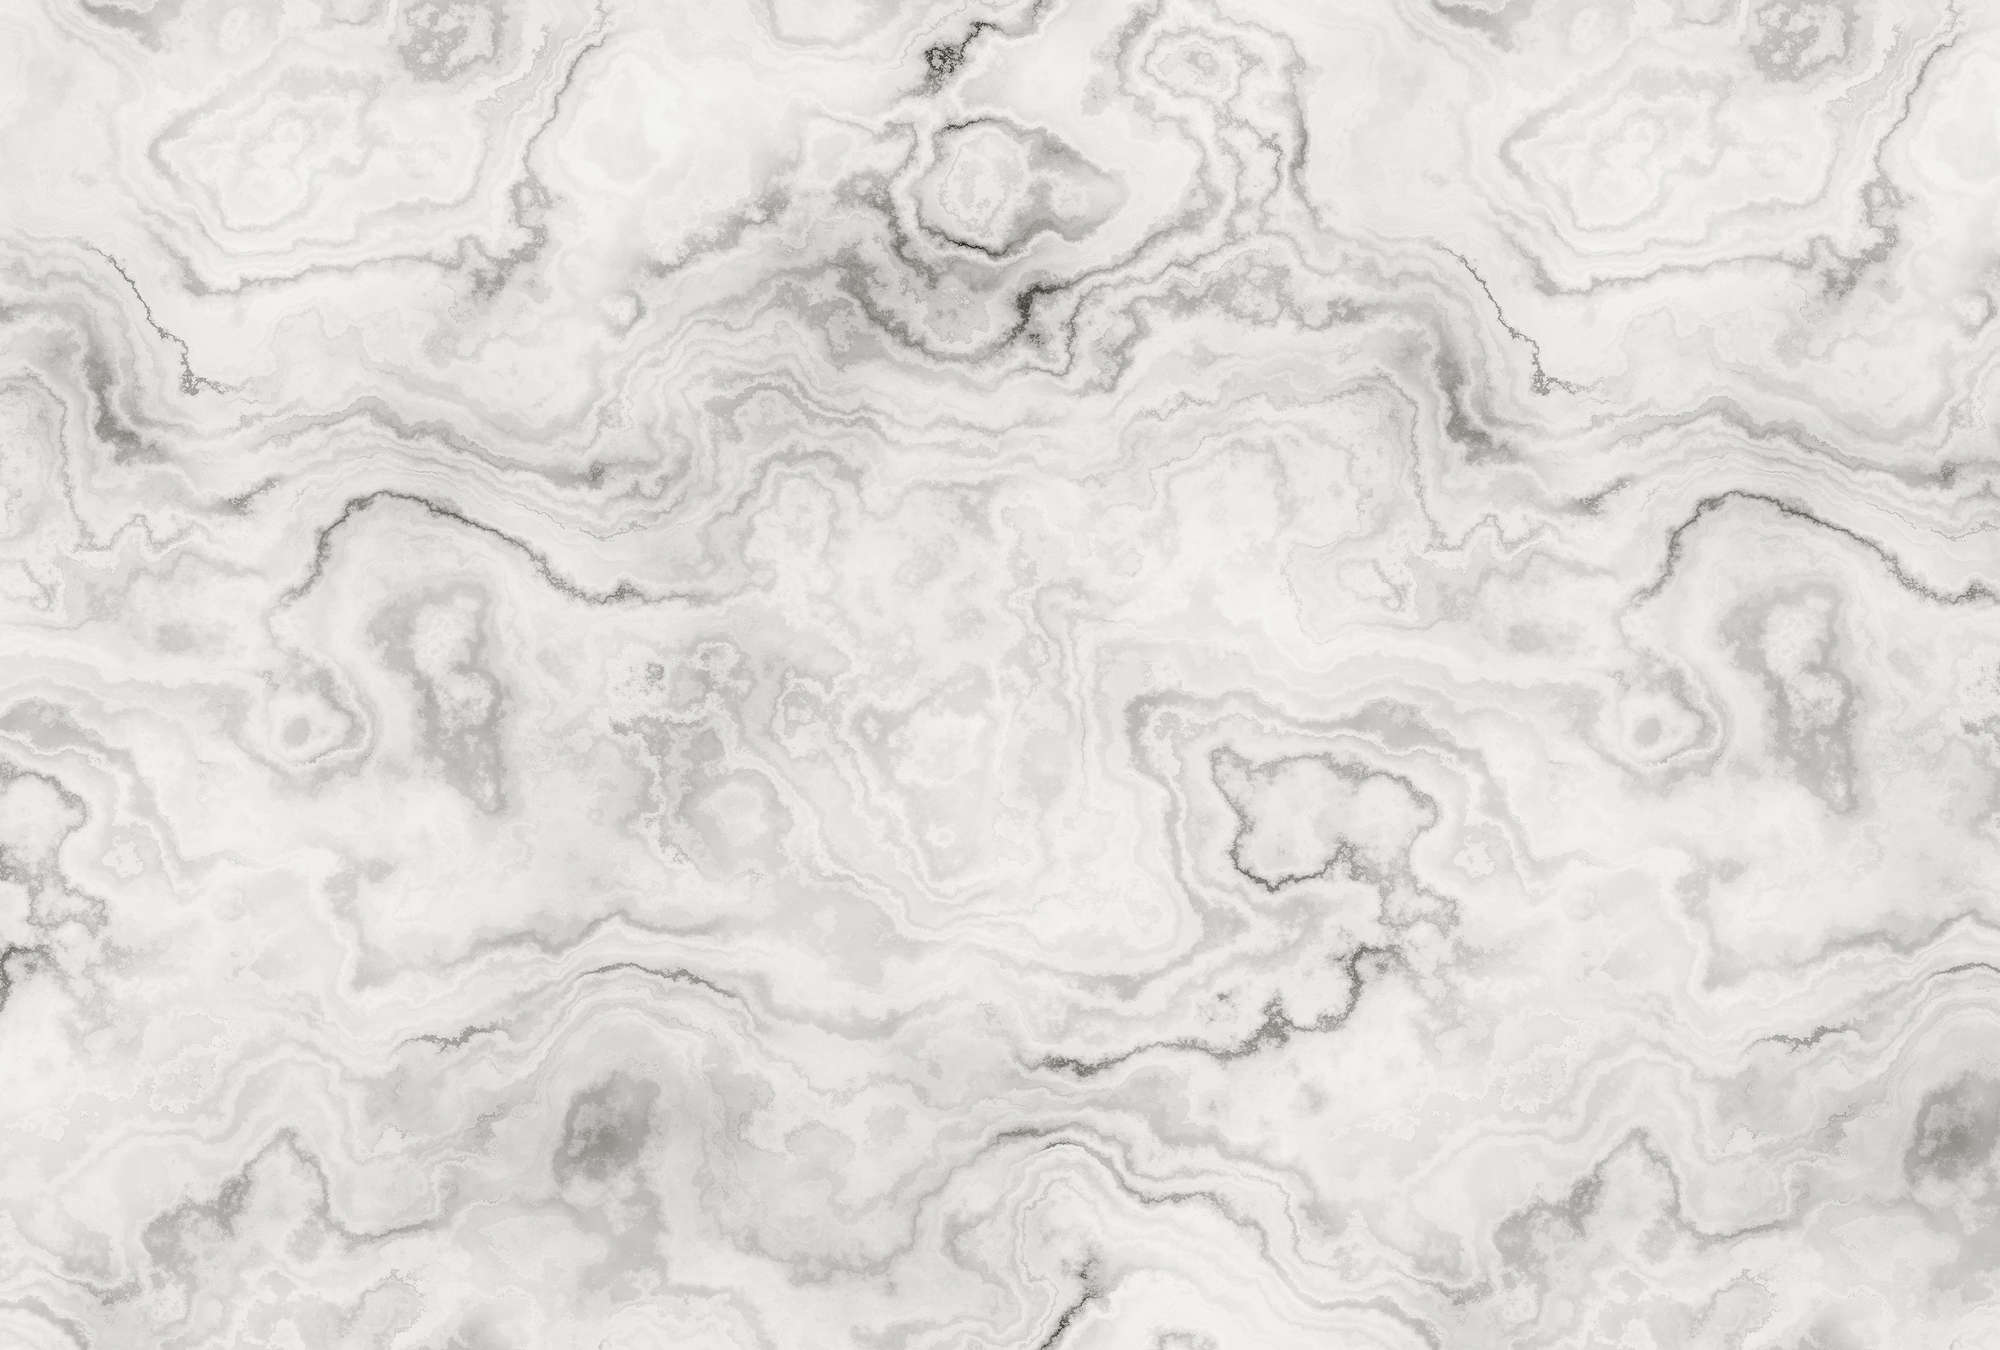             Carrara 1 - Elegante carta da parati effetto marmo - Grigio, Bianco | Vello liscio opaco
        